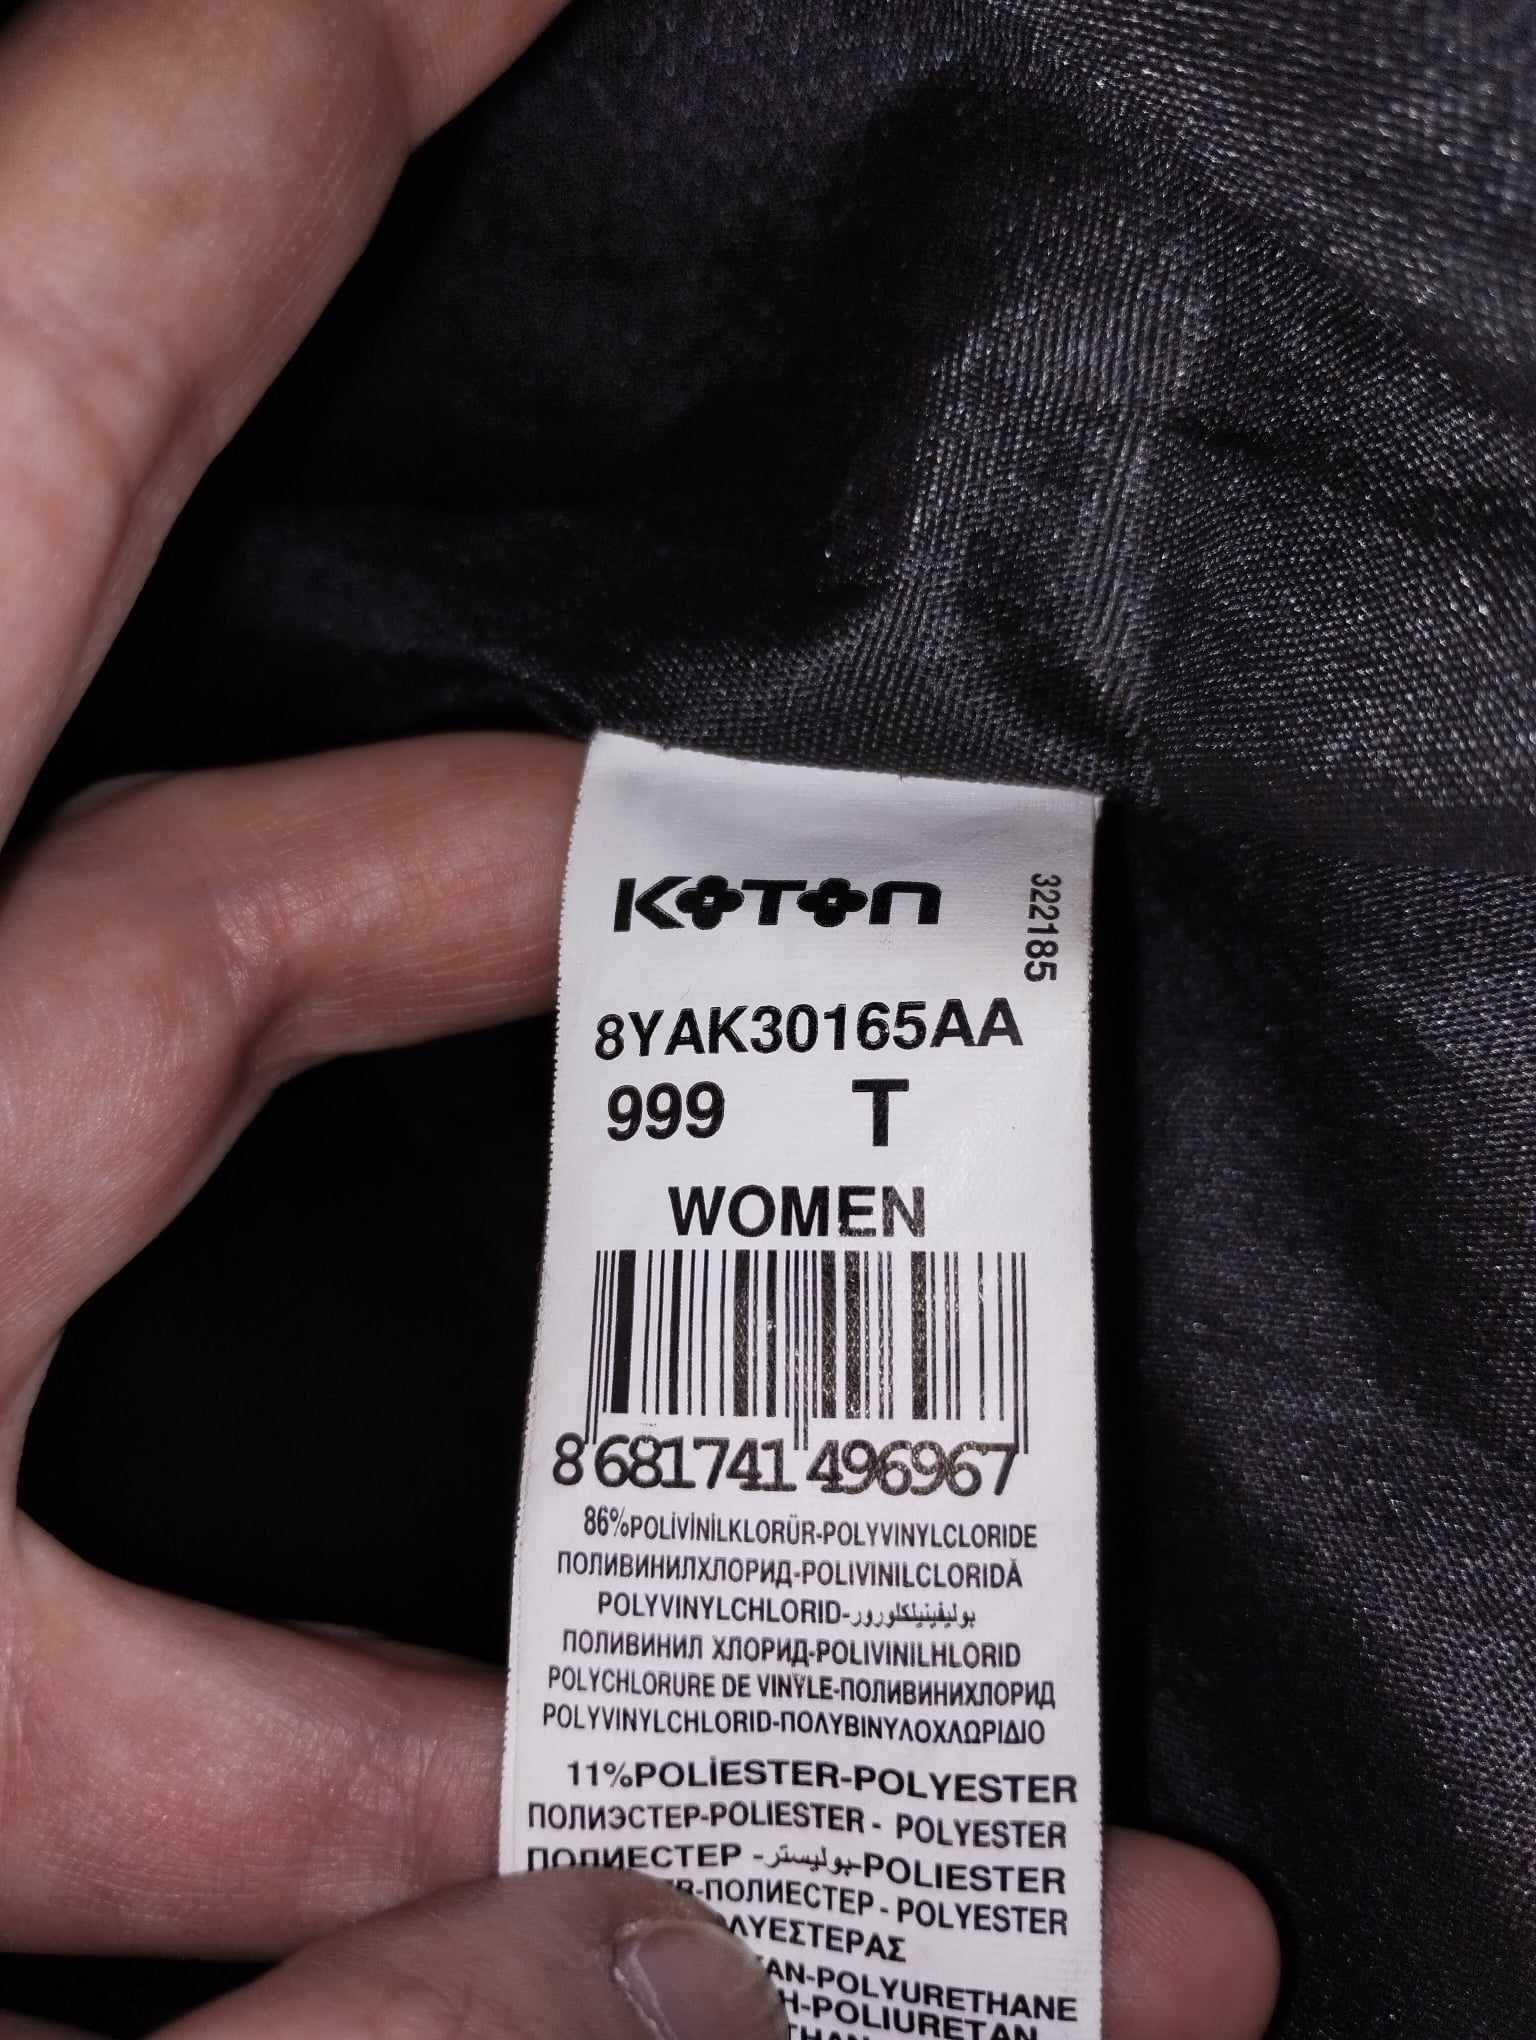 Duża pojemna czarna torebka damska marki Koton